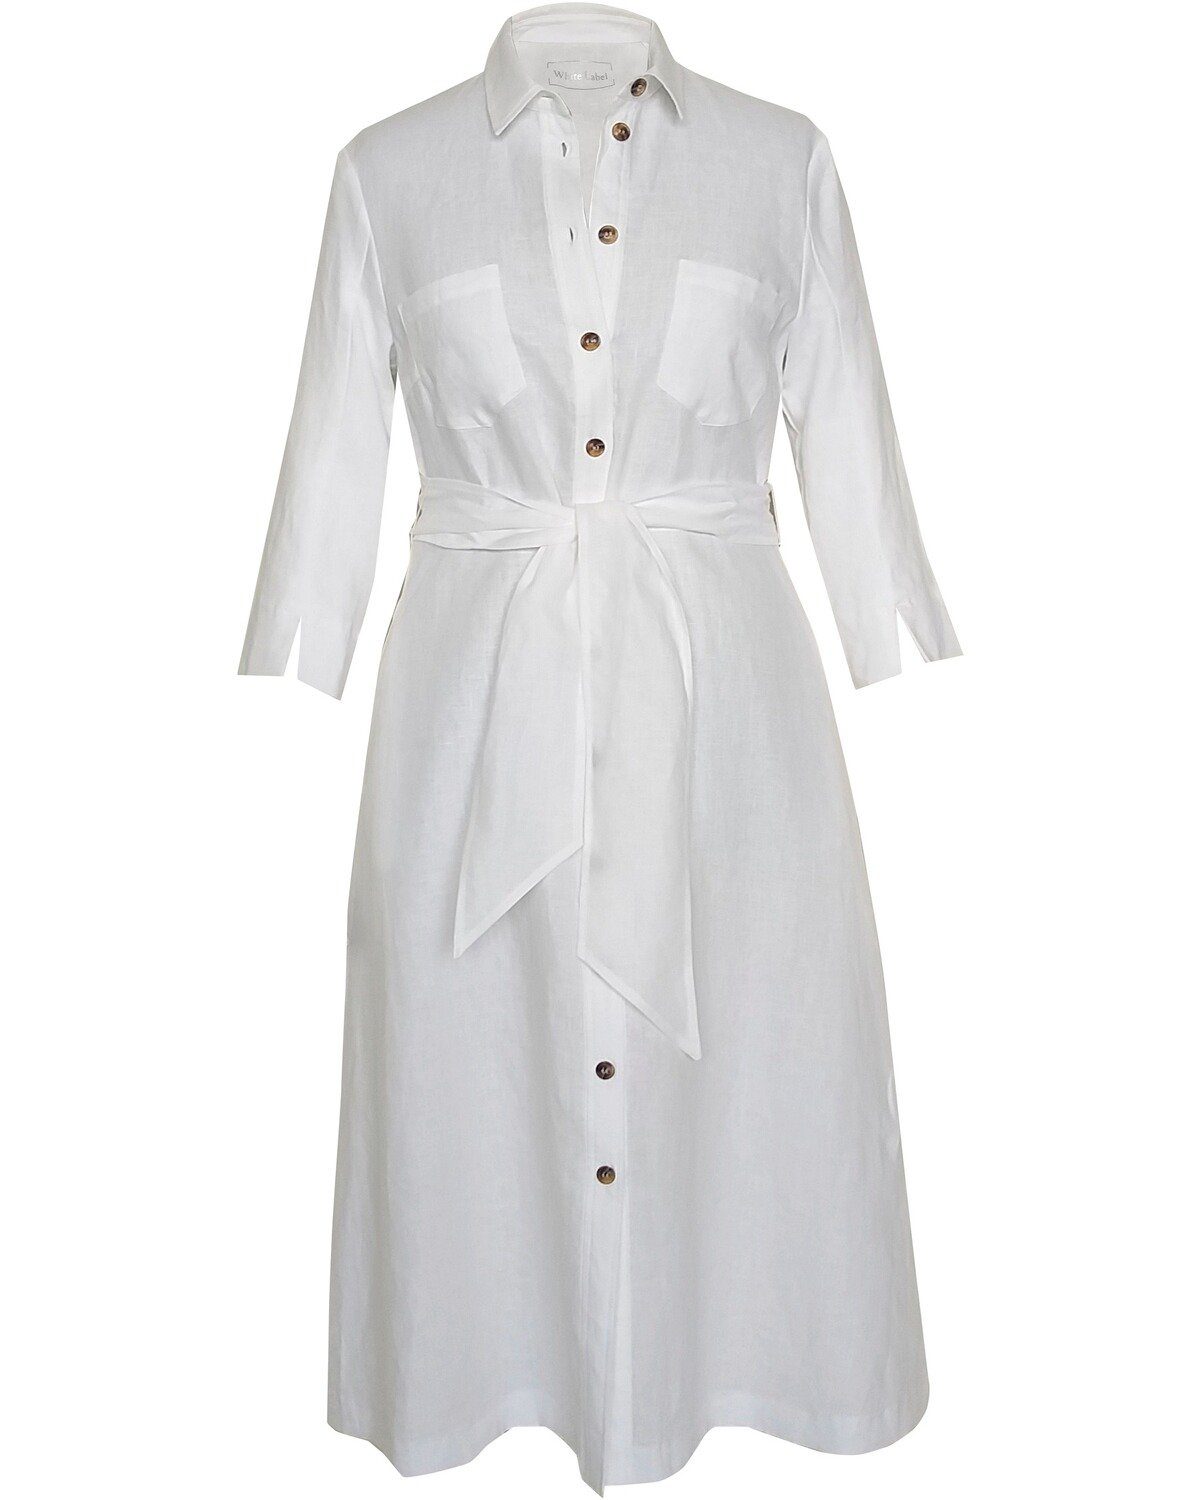 Weiß Label White Maxikleid Hemdblusenkleid